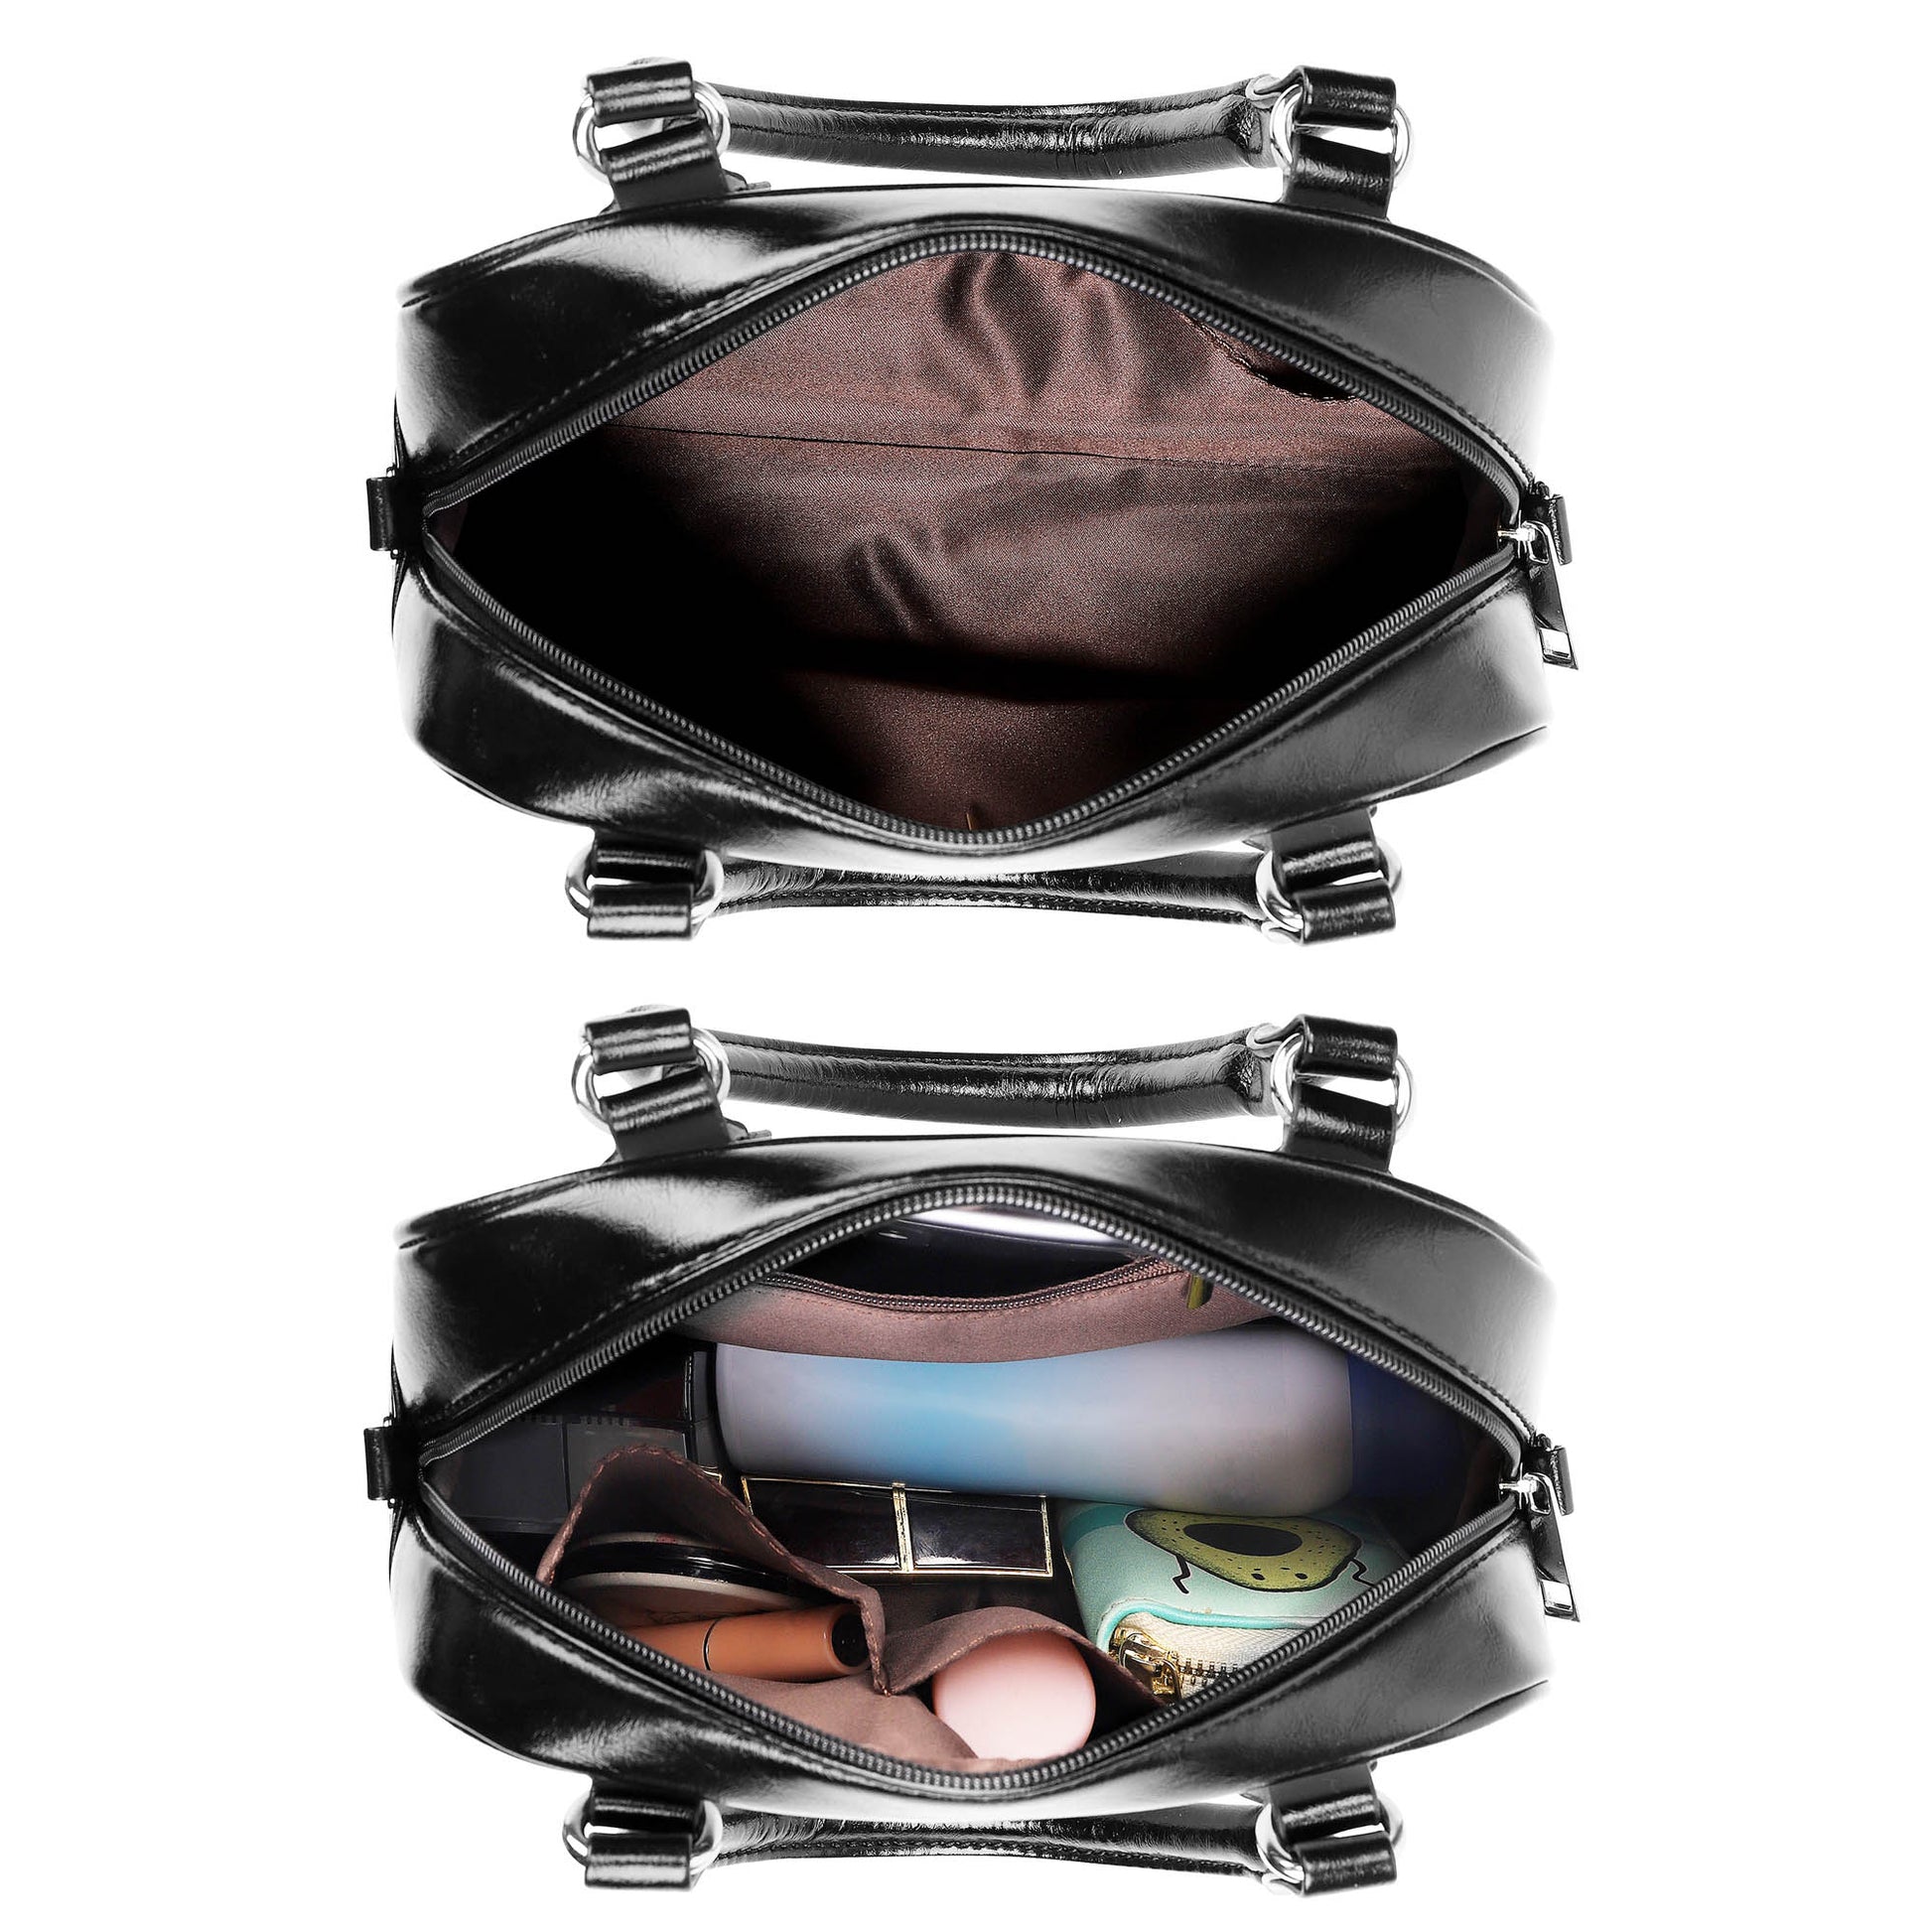 Nevoy Tartan Shoulder Handbags with Family Crest - Tartanvibesclothing